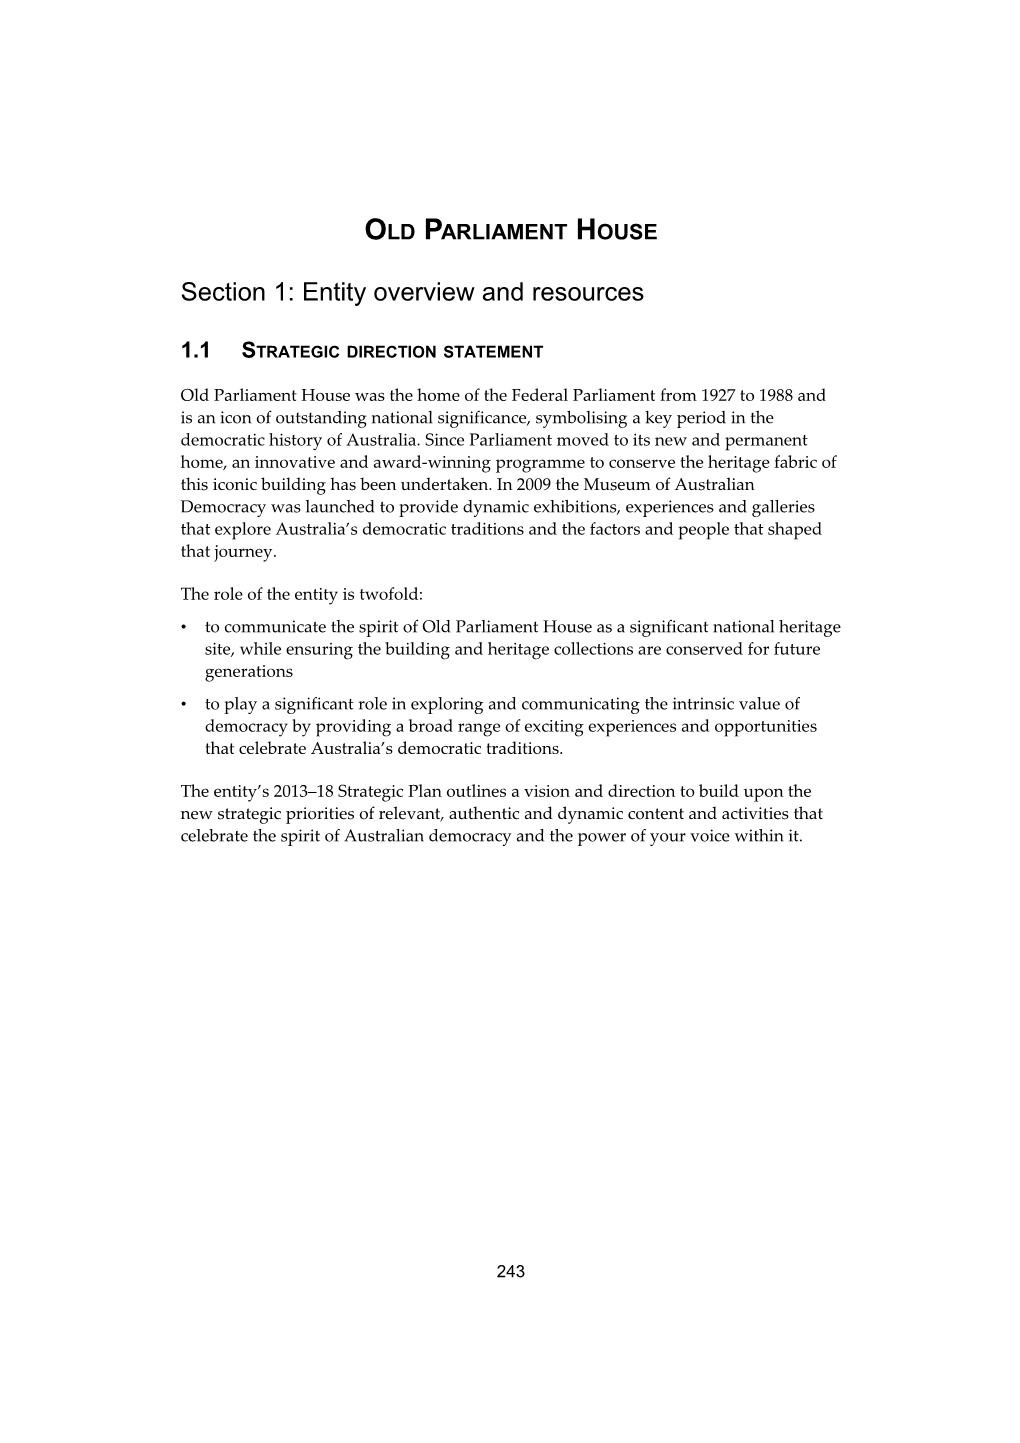 Portfolio Budget Statements - OLD PARLIAMENT HOUSE